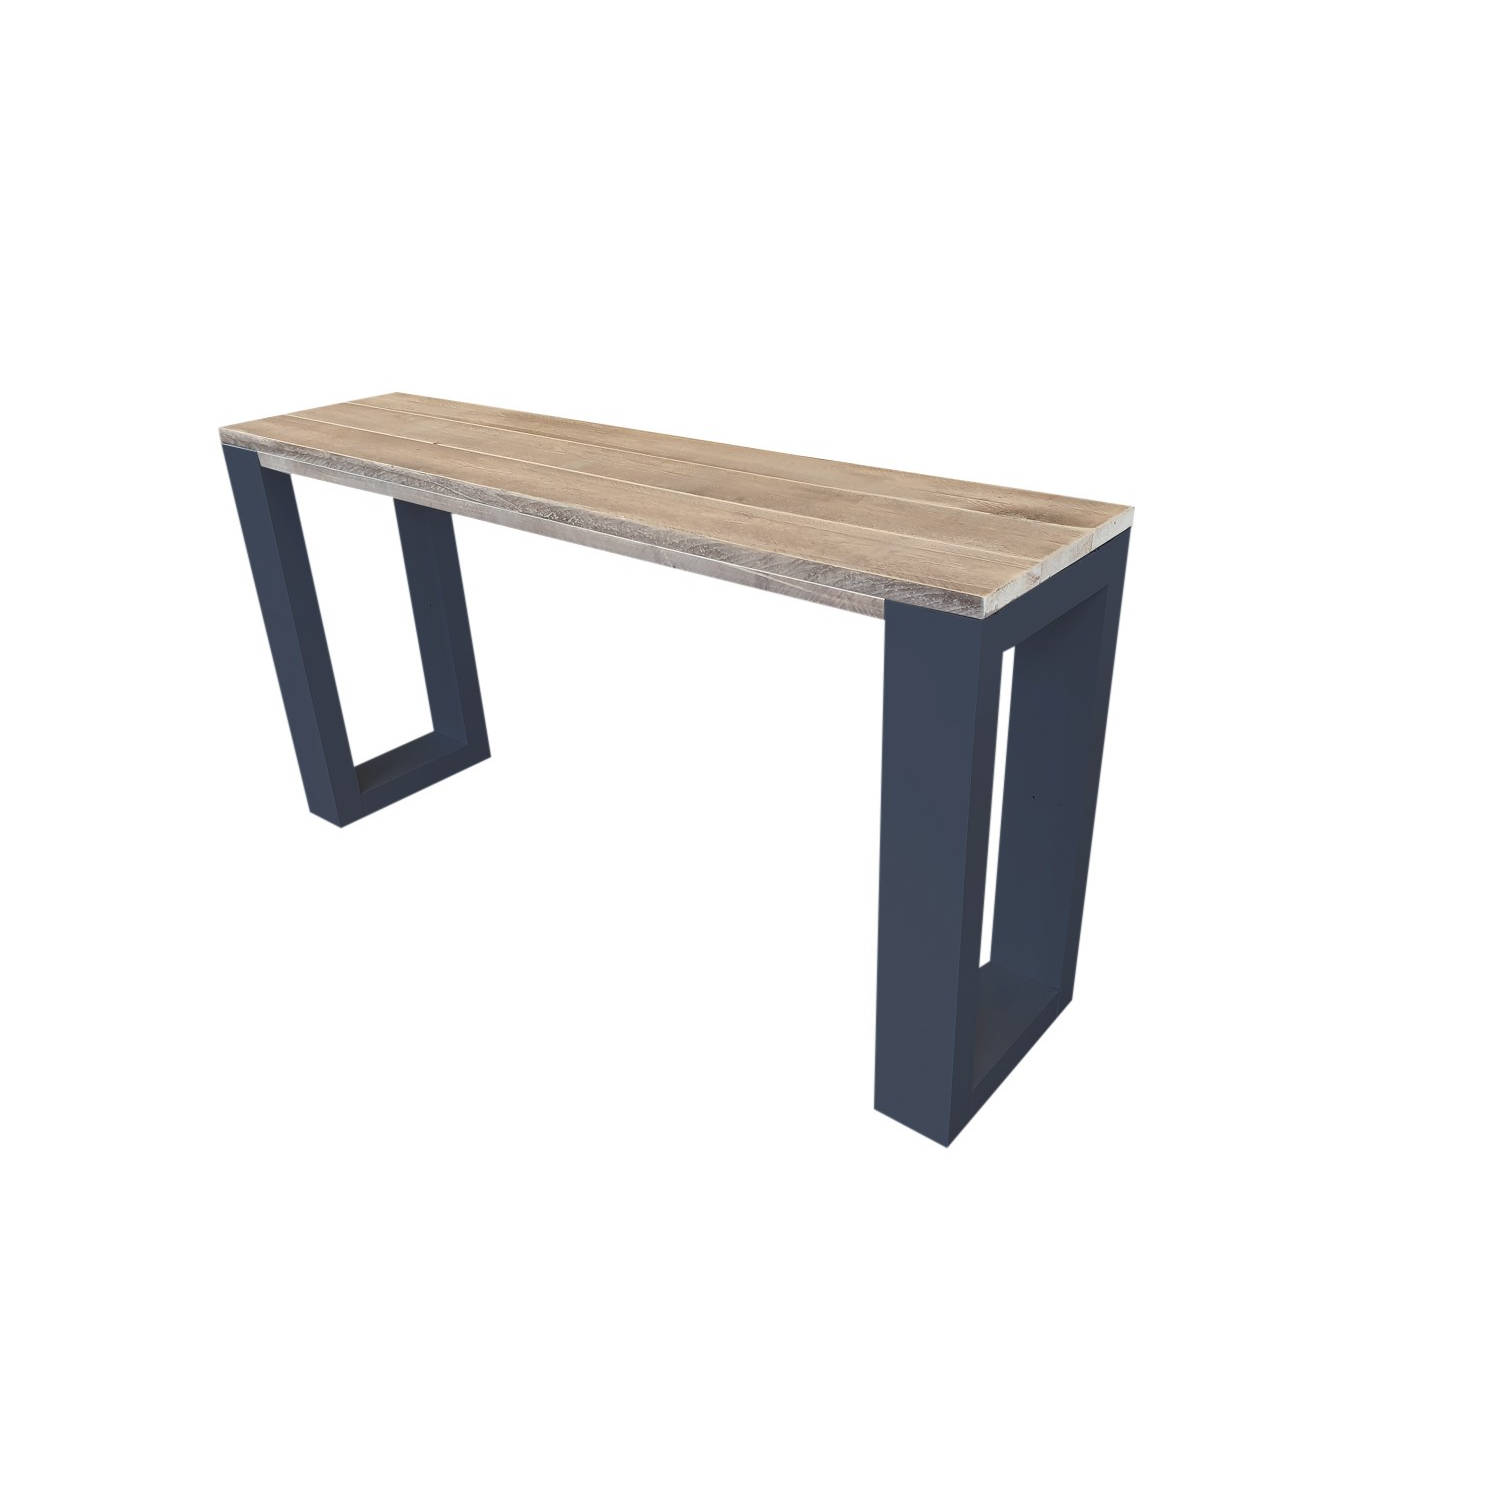 Wood4you Side table enkel steigerhout - Antraciet Eettafels 120 cm Bijzettafel